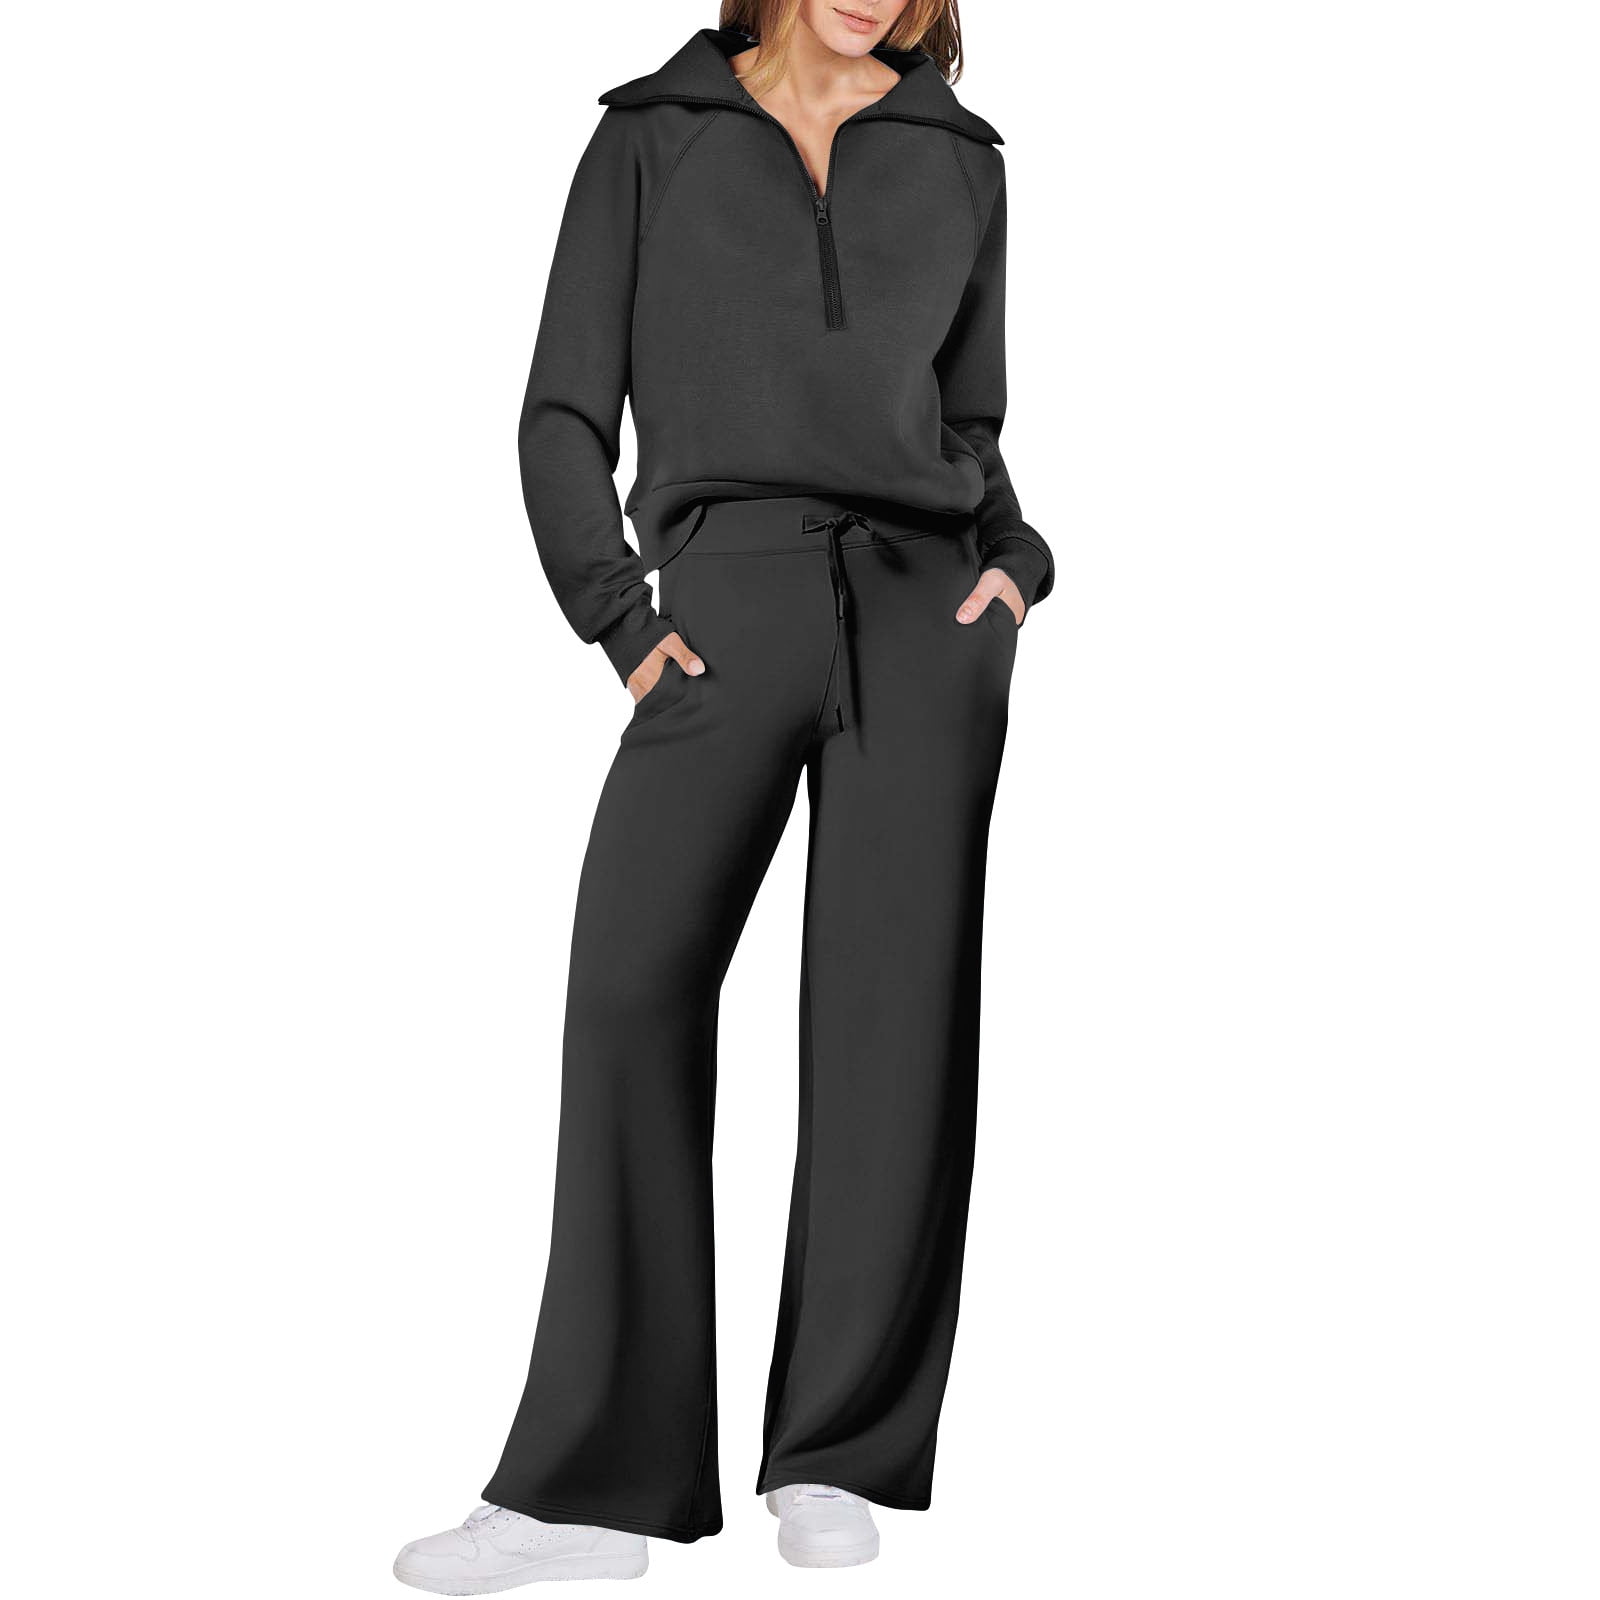 Mlqidk Women 2 Piece Outfits Fall Set Sweatsuit Oversized Half Zip ...